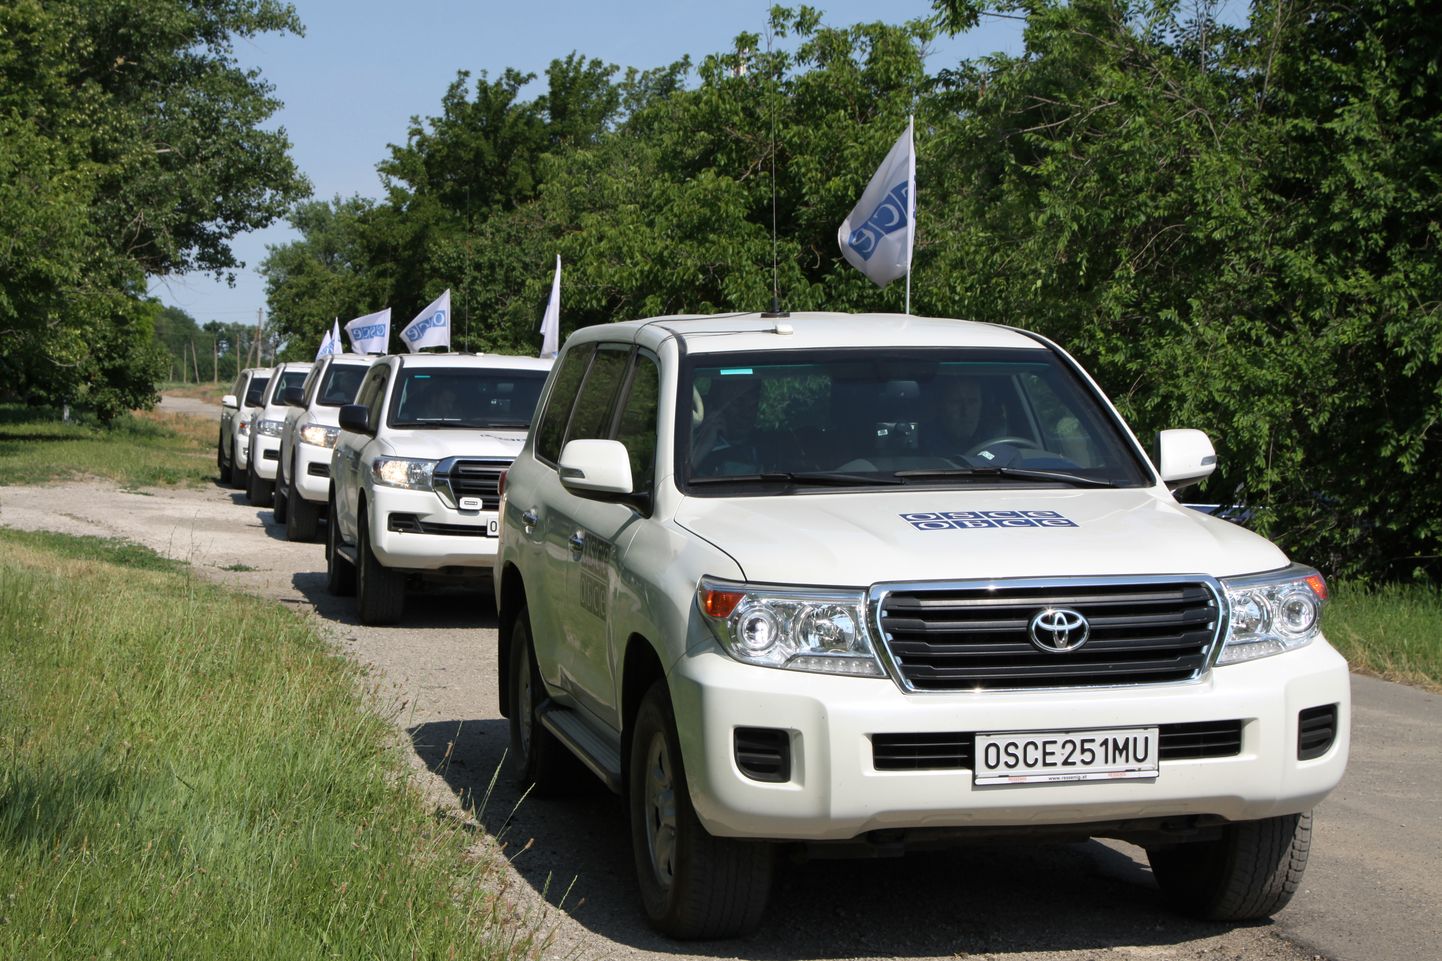 OSCE vaatlejad Ida-Ukrainas.